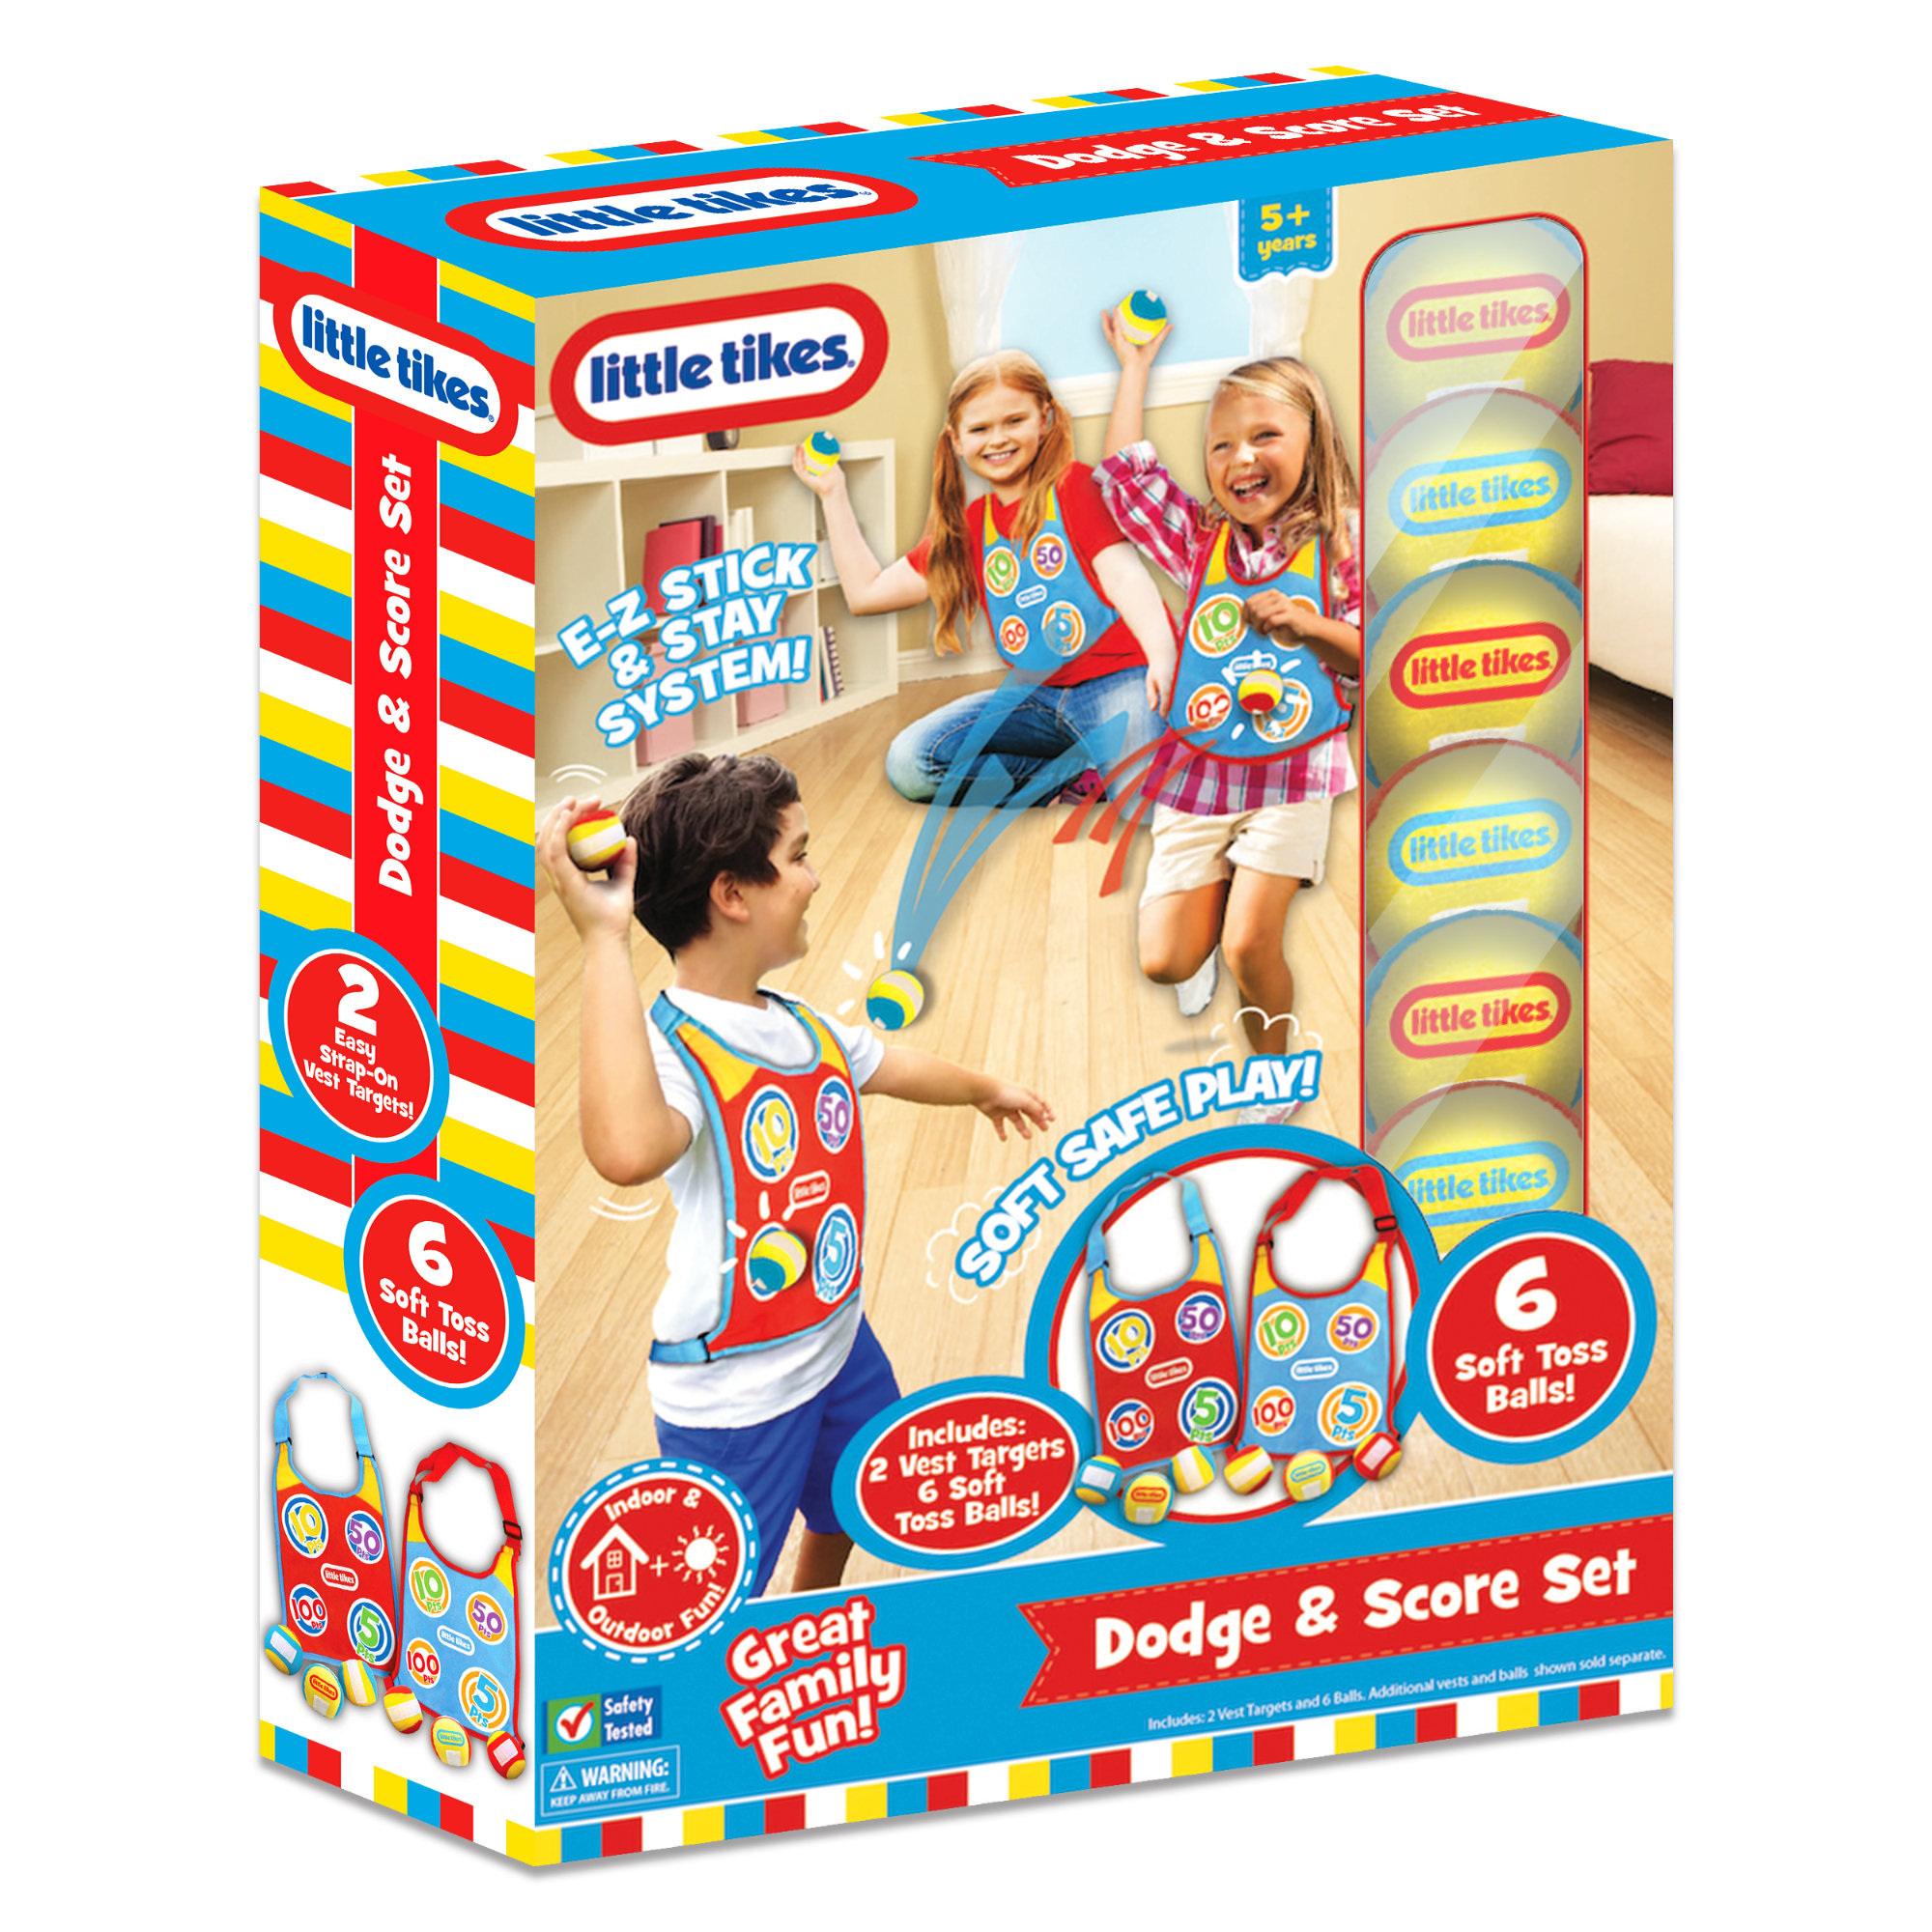 Little Tikes Dodge & Score Game For Kids W/ 2 Vests & 6 Balls | Wayfair